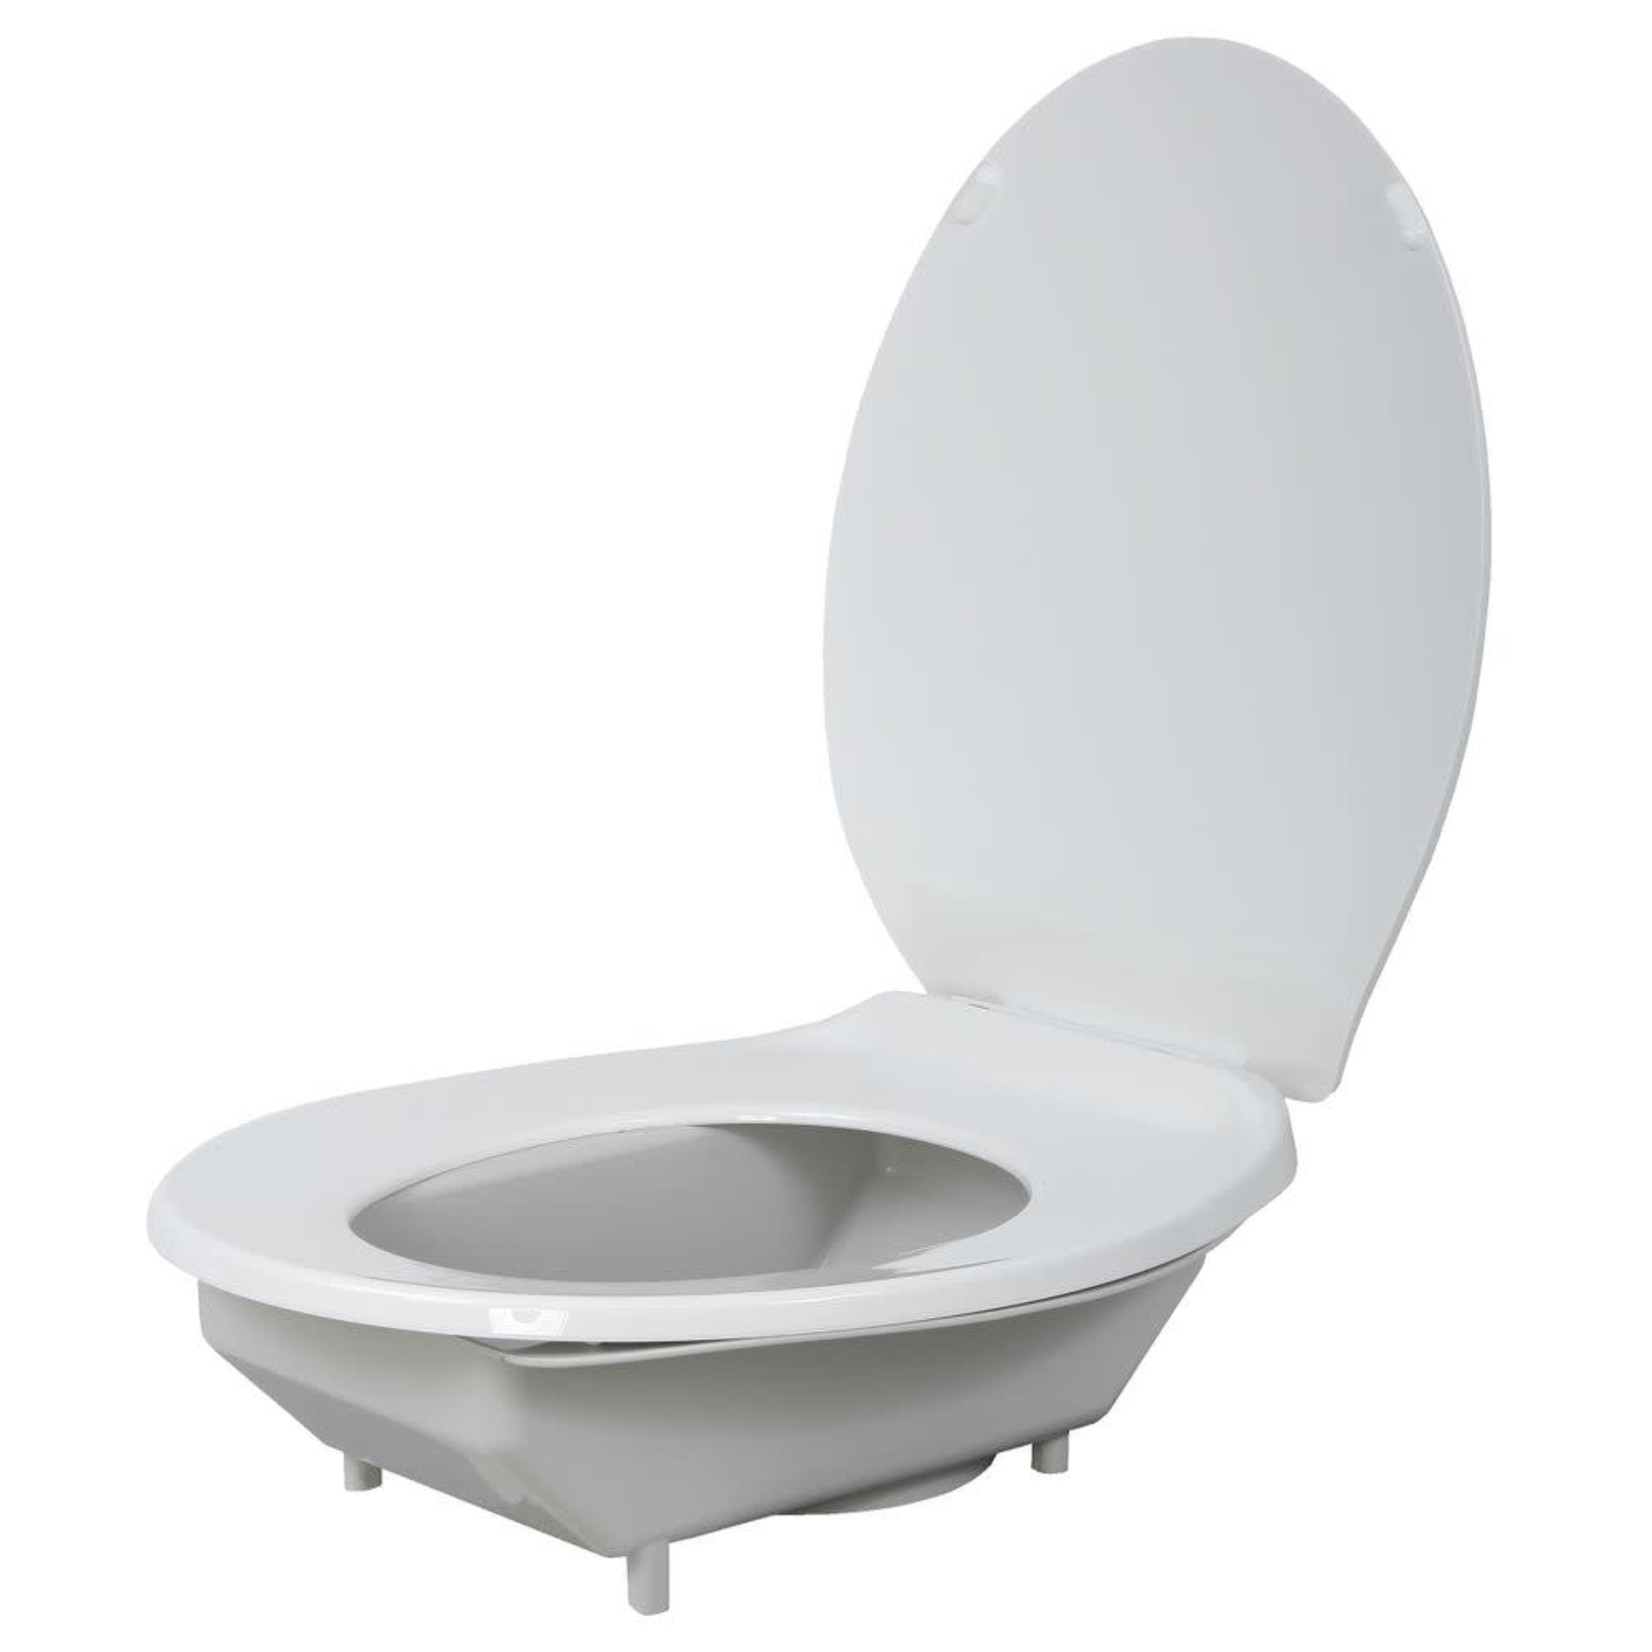 ECO-Safe Toilet Seat Assembly